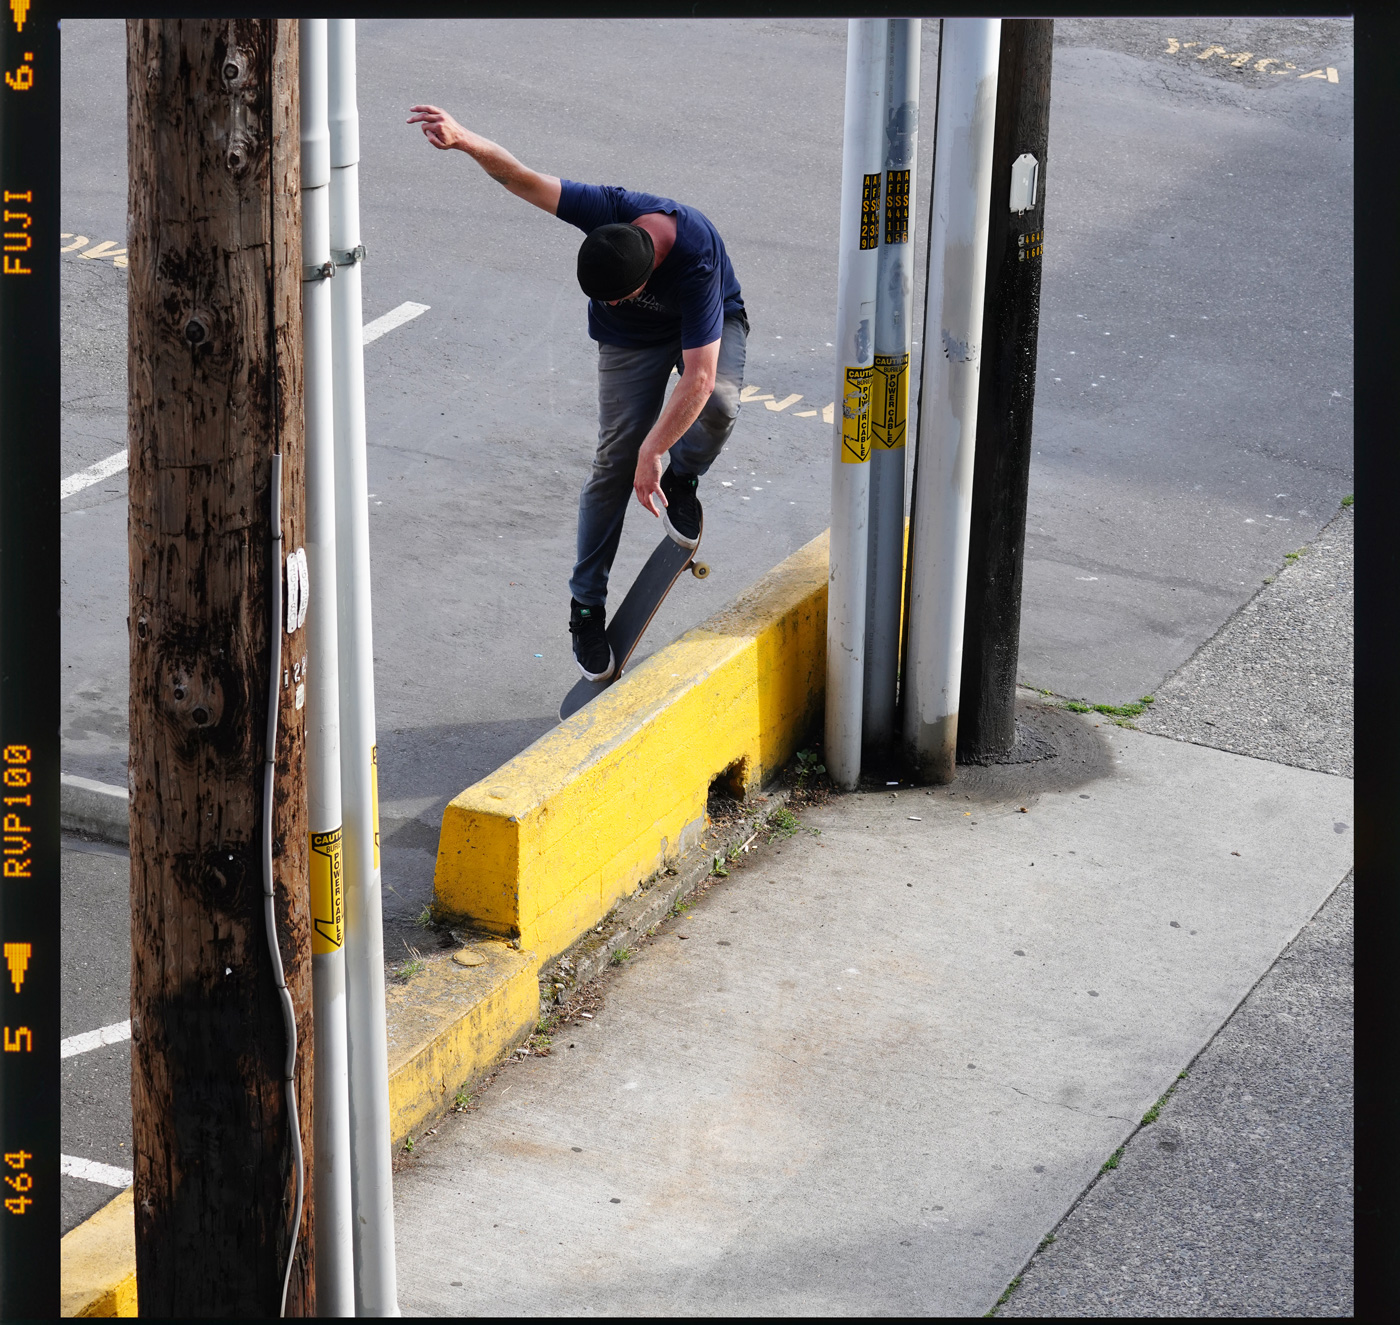 Interview with Washington Skateboarding Legend, Cam Barrett - photo by Fred Zahina